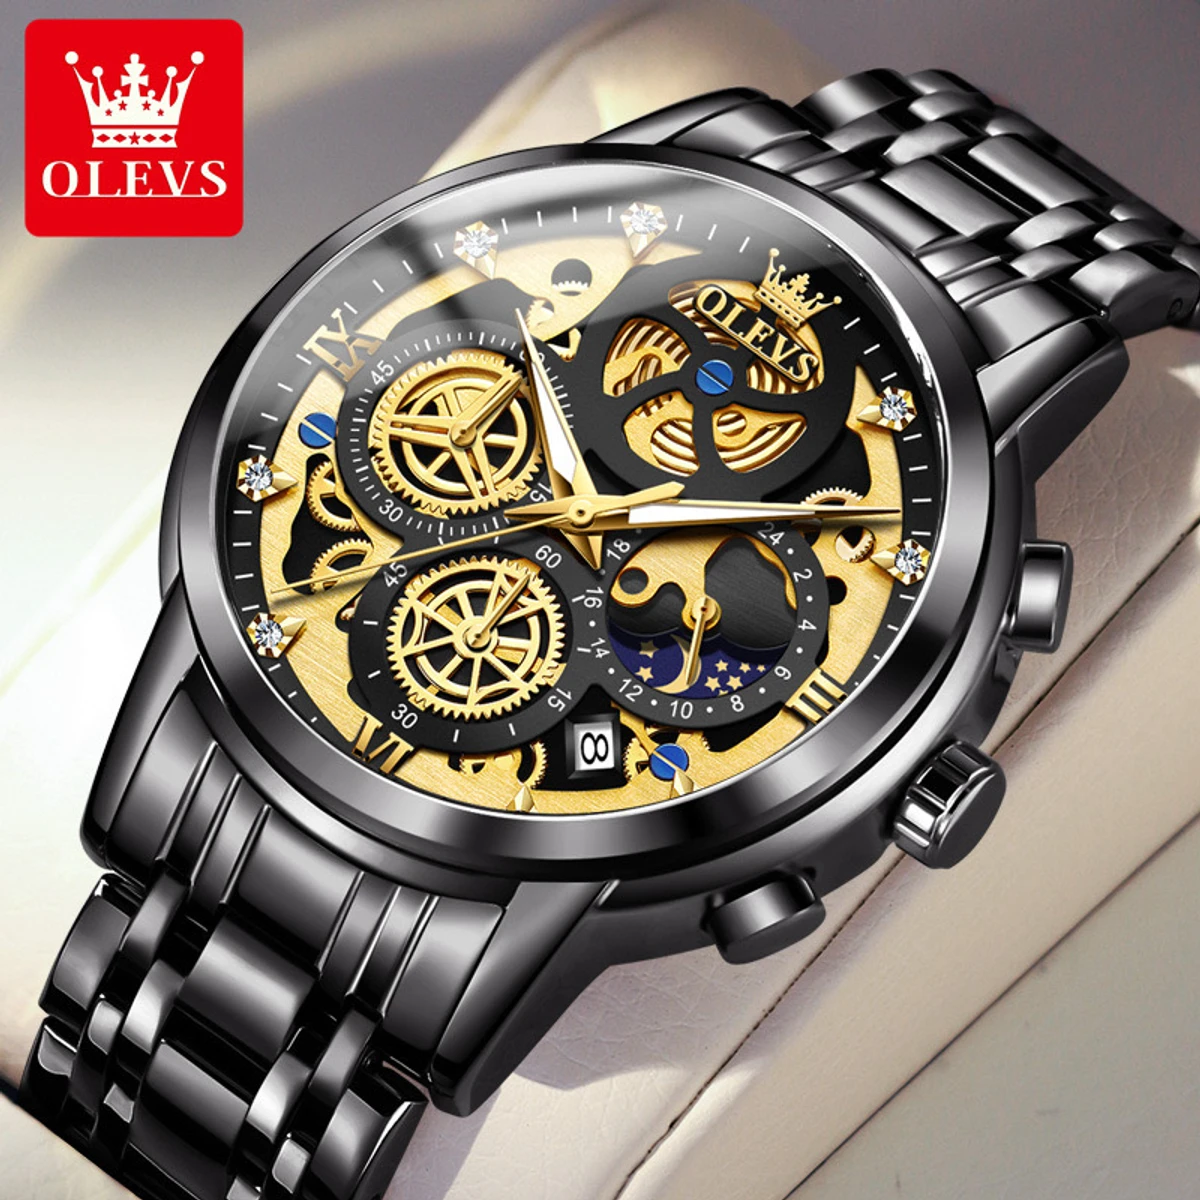 OLEVS Top Quartz Men's Brand Watch Luxury Watch Style Men's Watch- Black & Blue